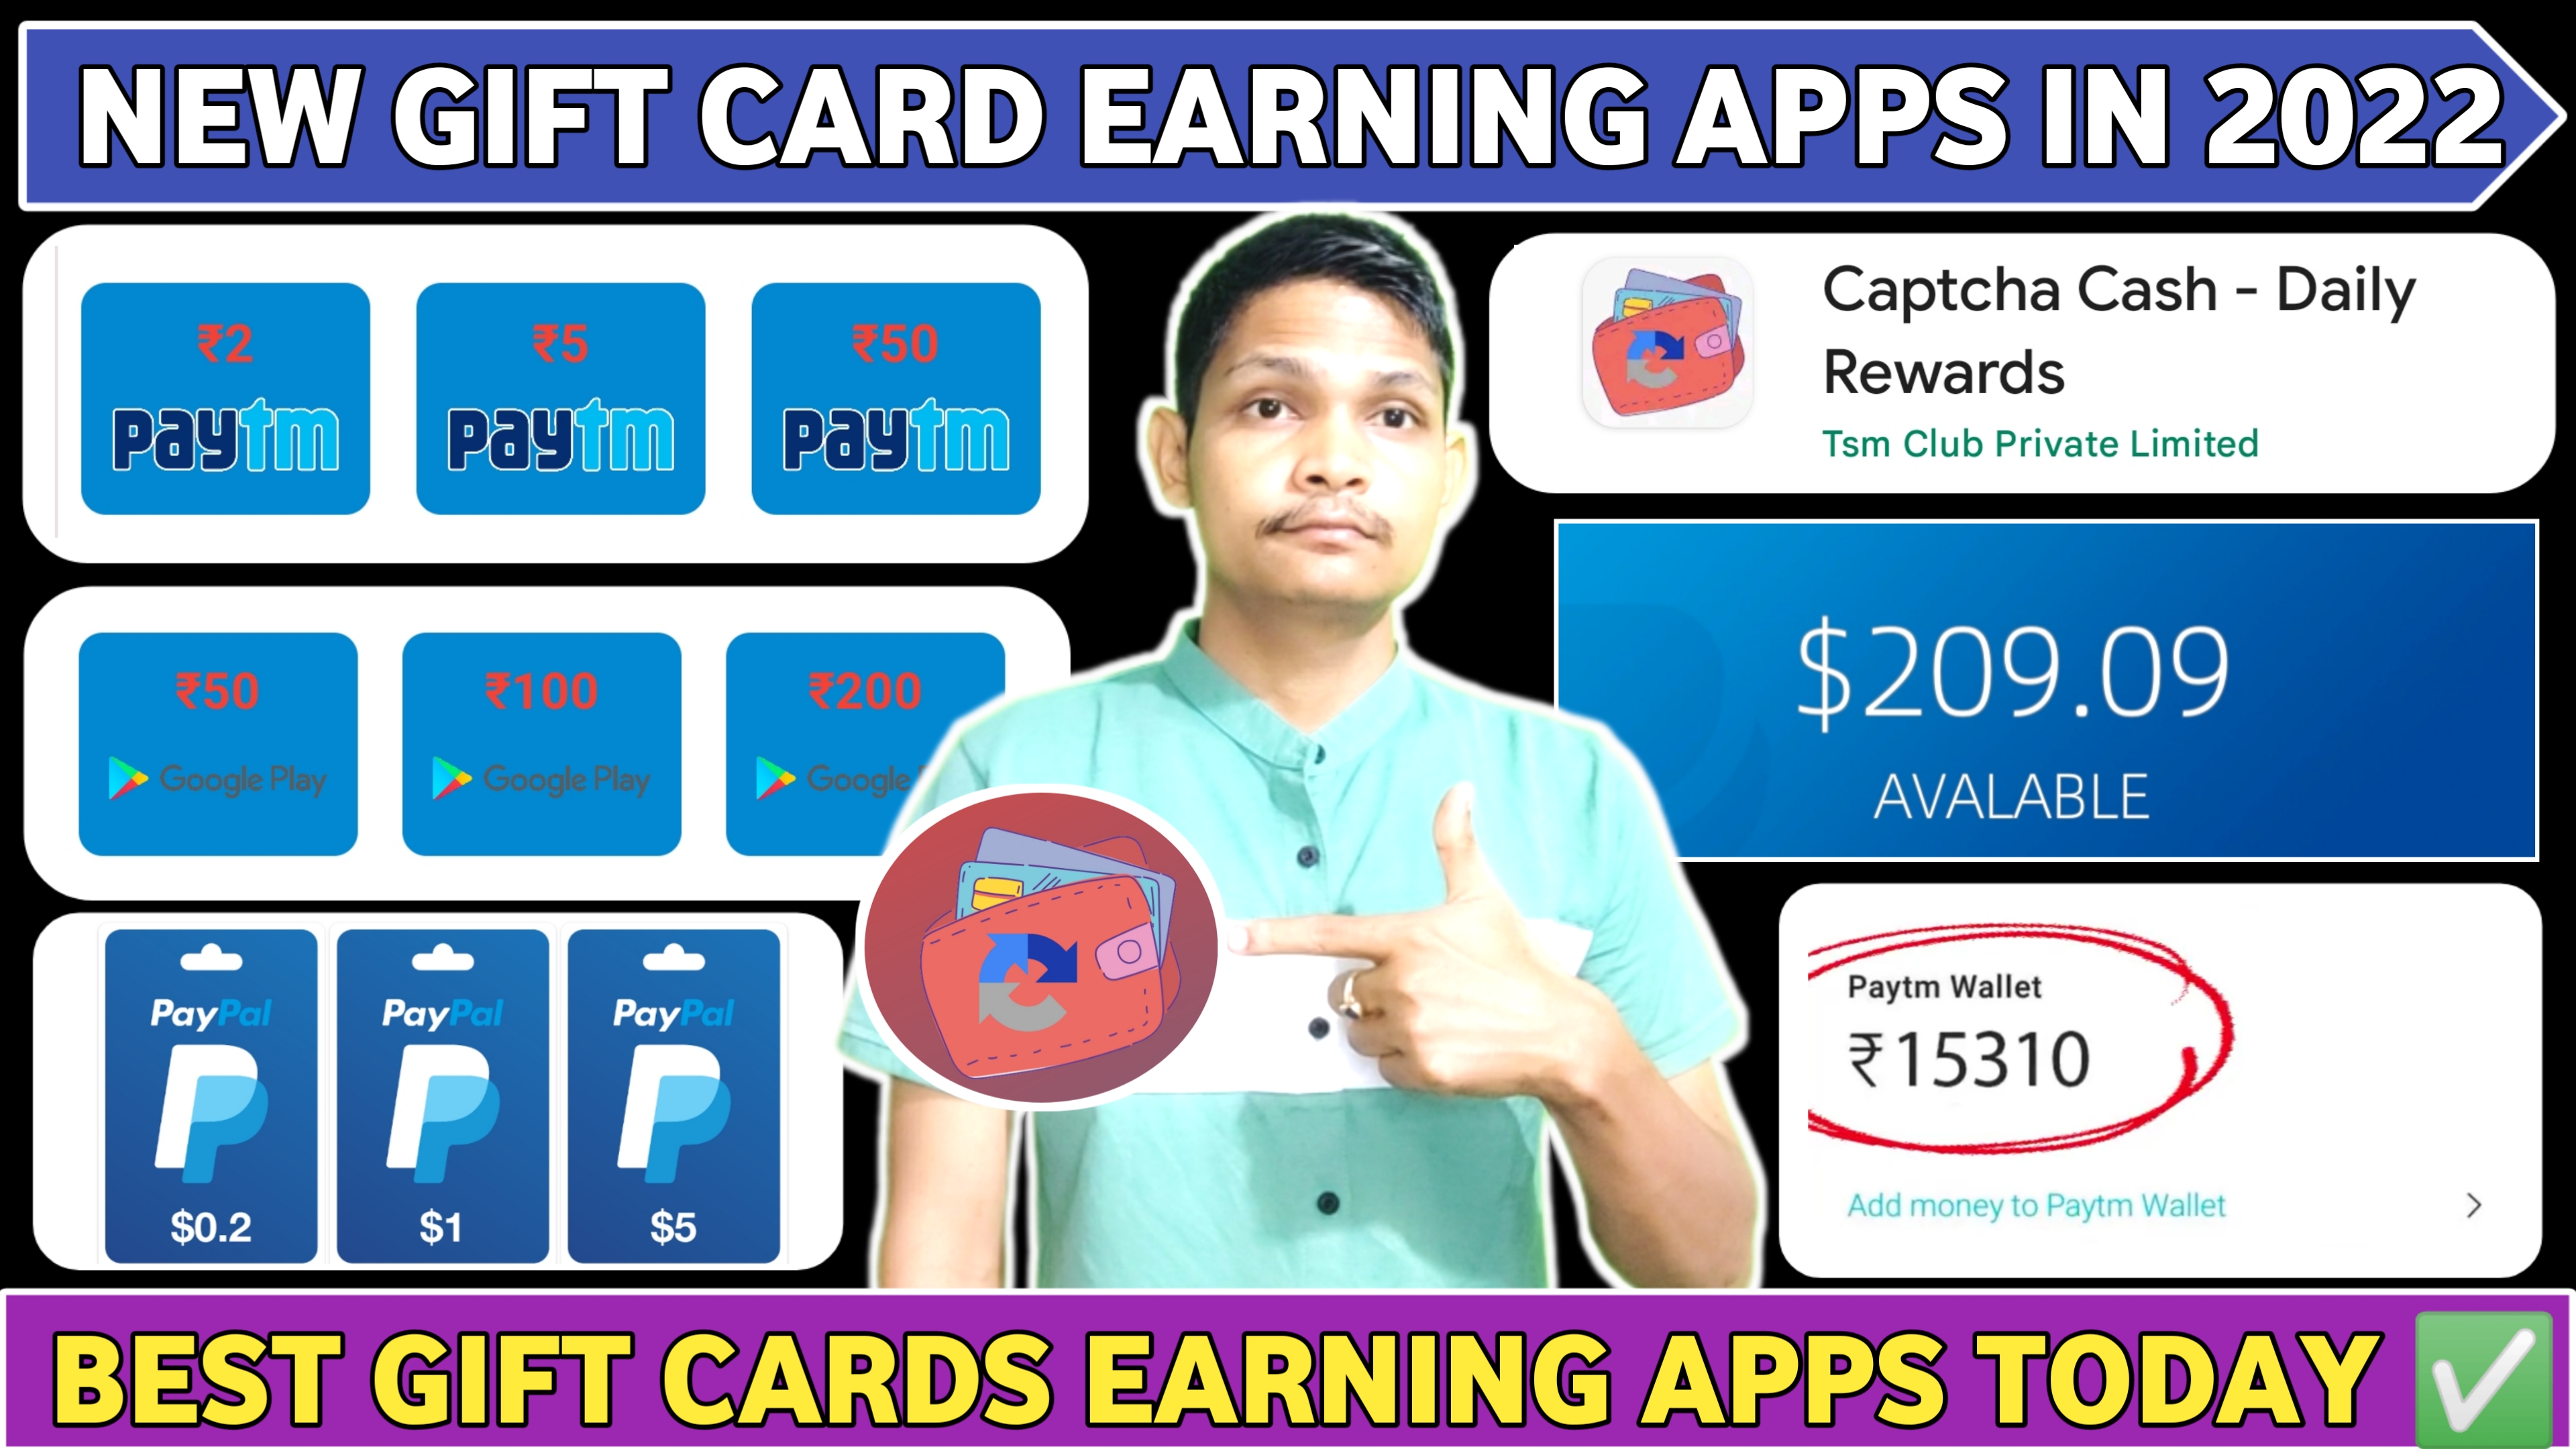 Captcha Cash Daily Rewards